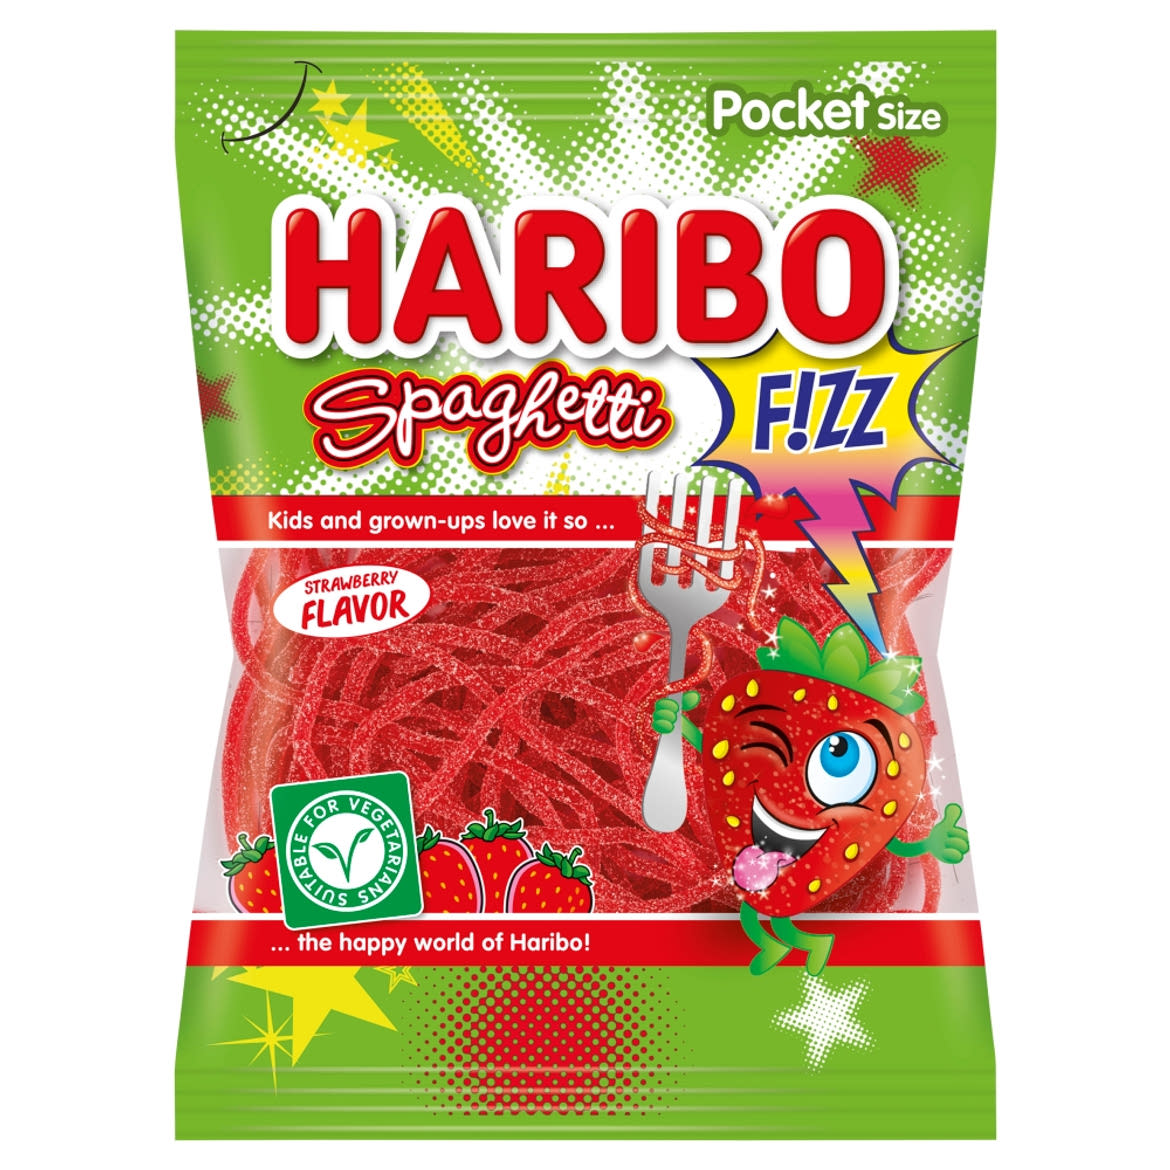 Haribo Spaghetti Erdbeer gyümölcsízű gumicukorka